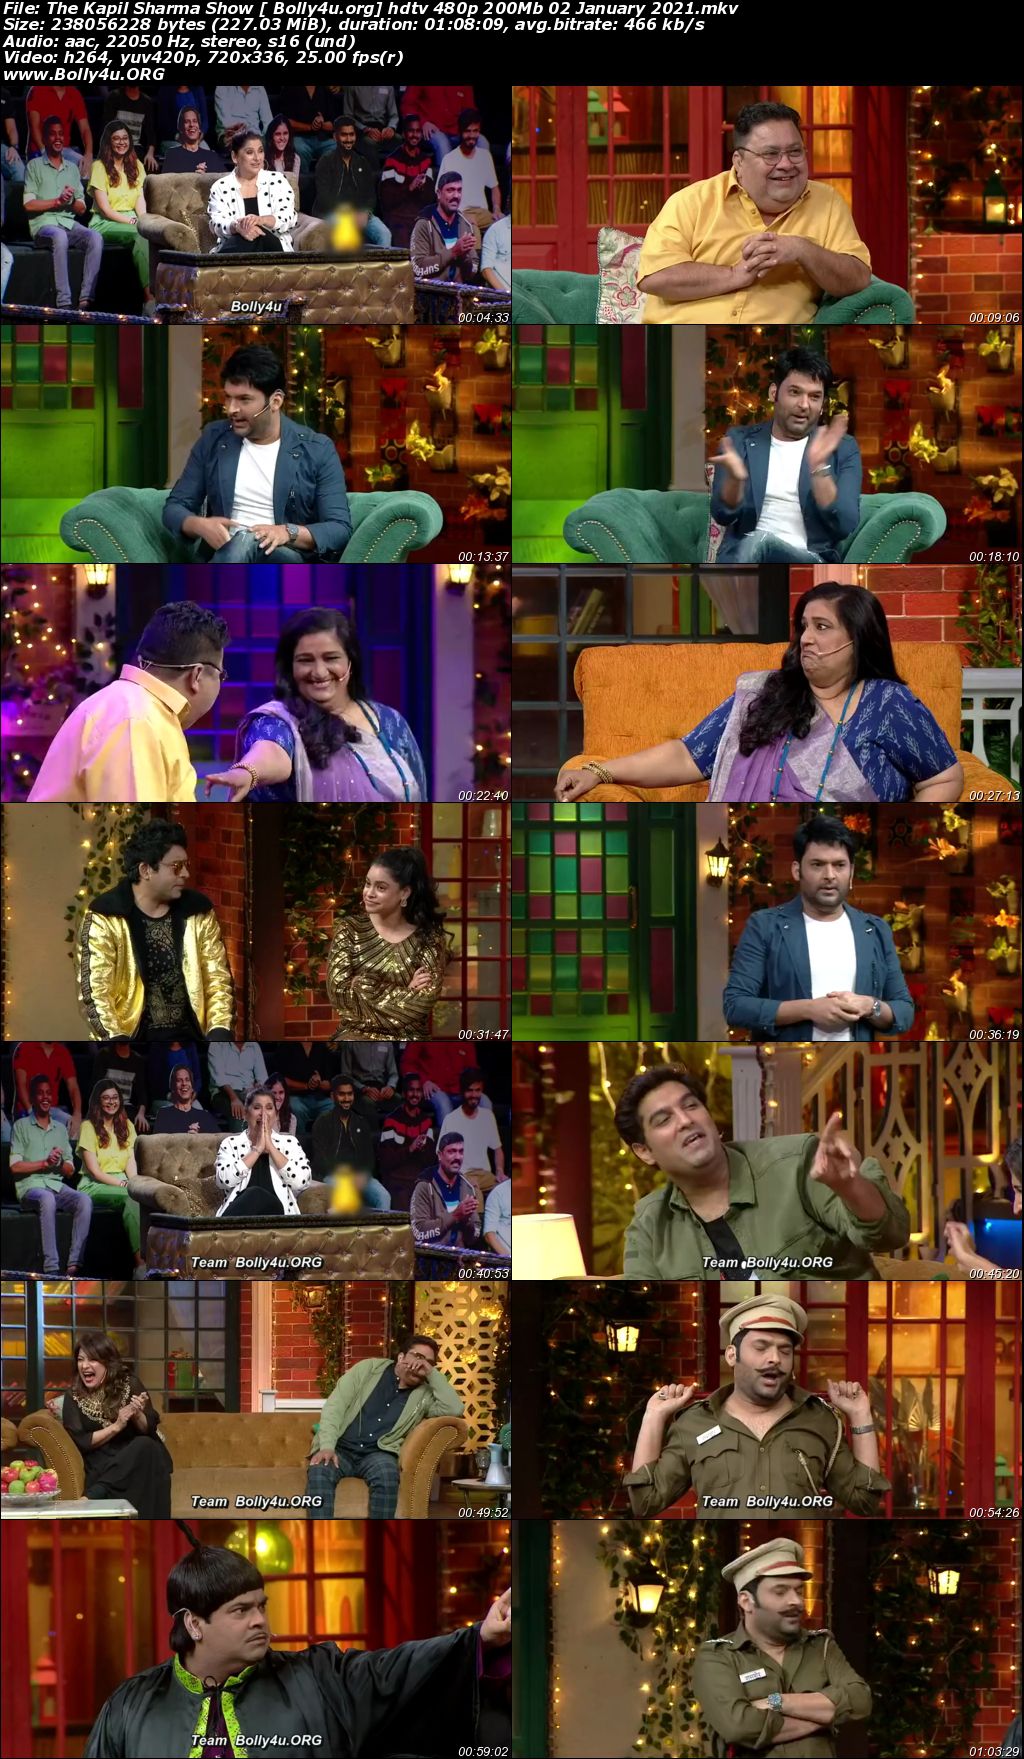 The Kapil Sharma Show HDTV 480p 200Mb 02 January 2021 Download